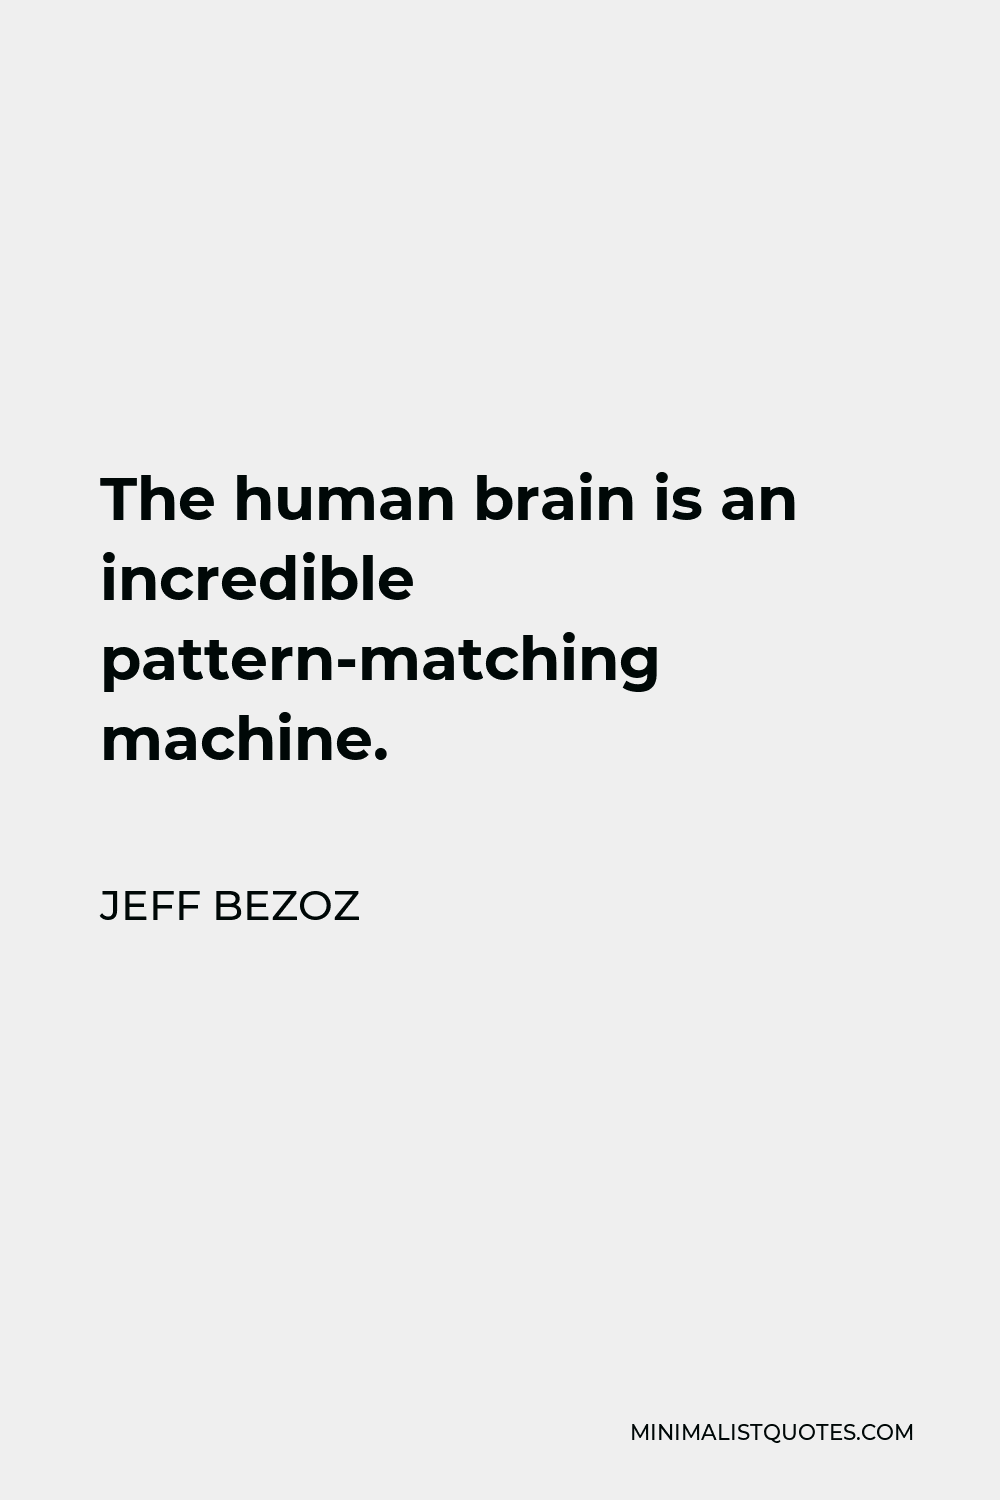 Jeff Bezoz Quote - The human brain is an incredible pattern-matching machine.